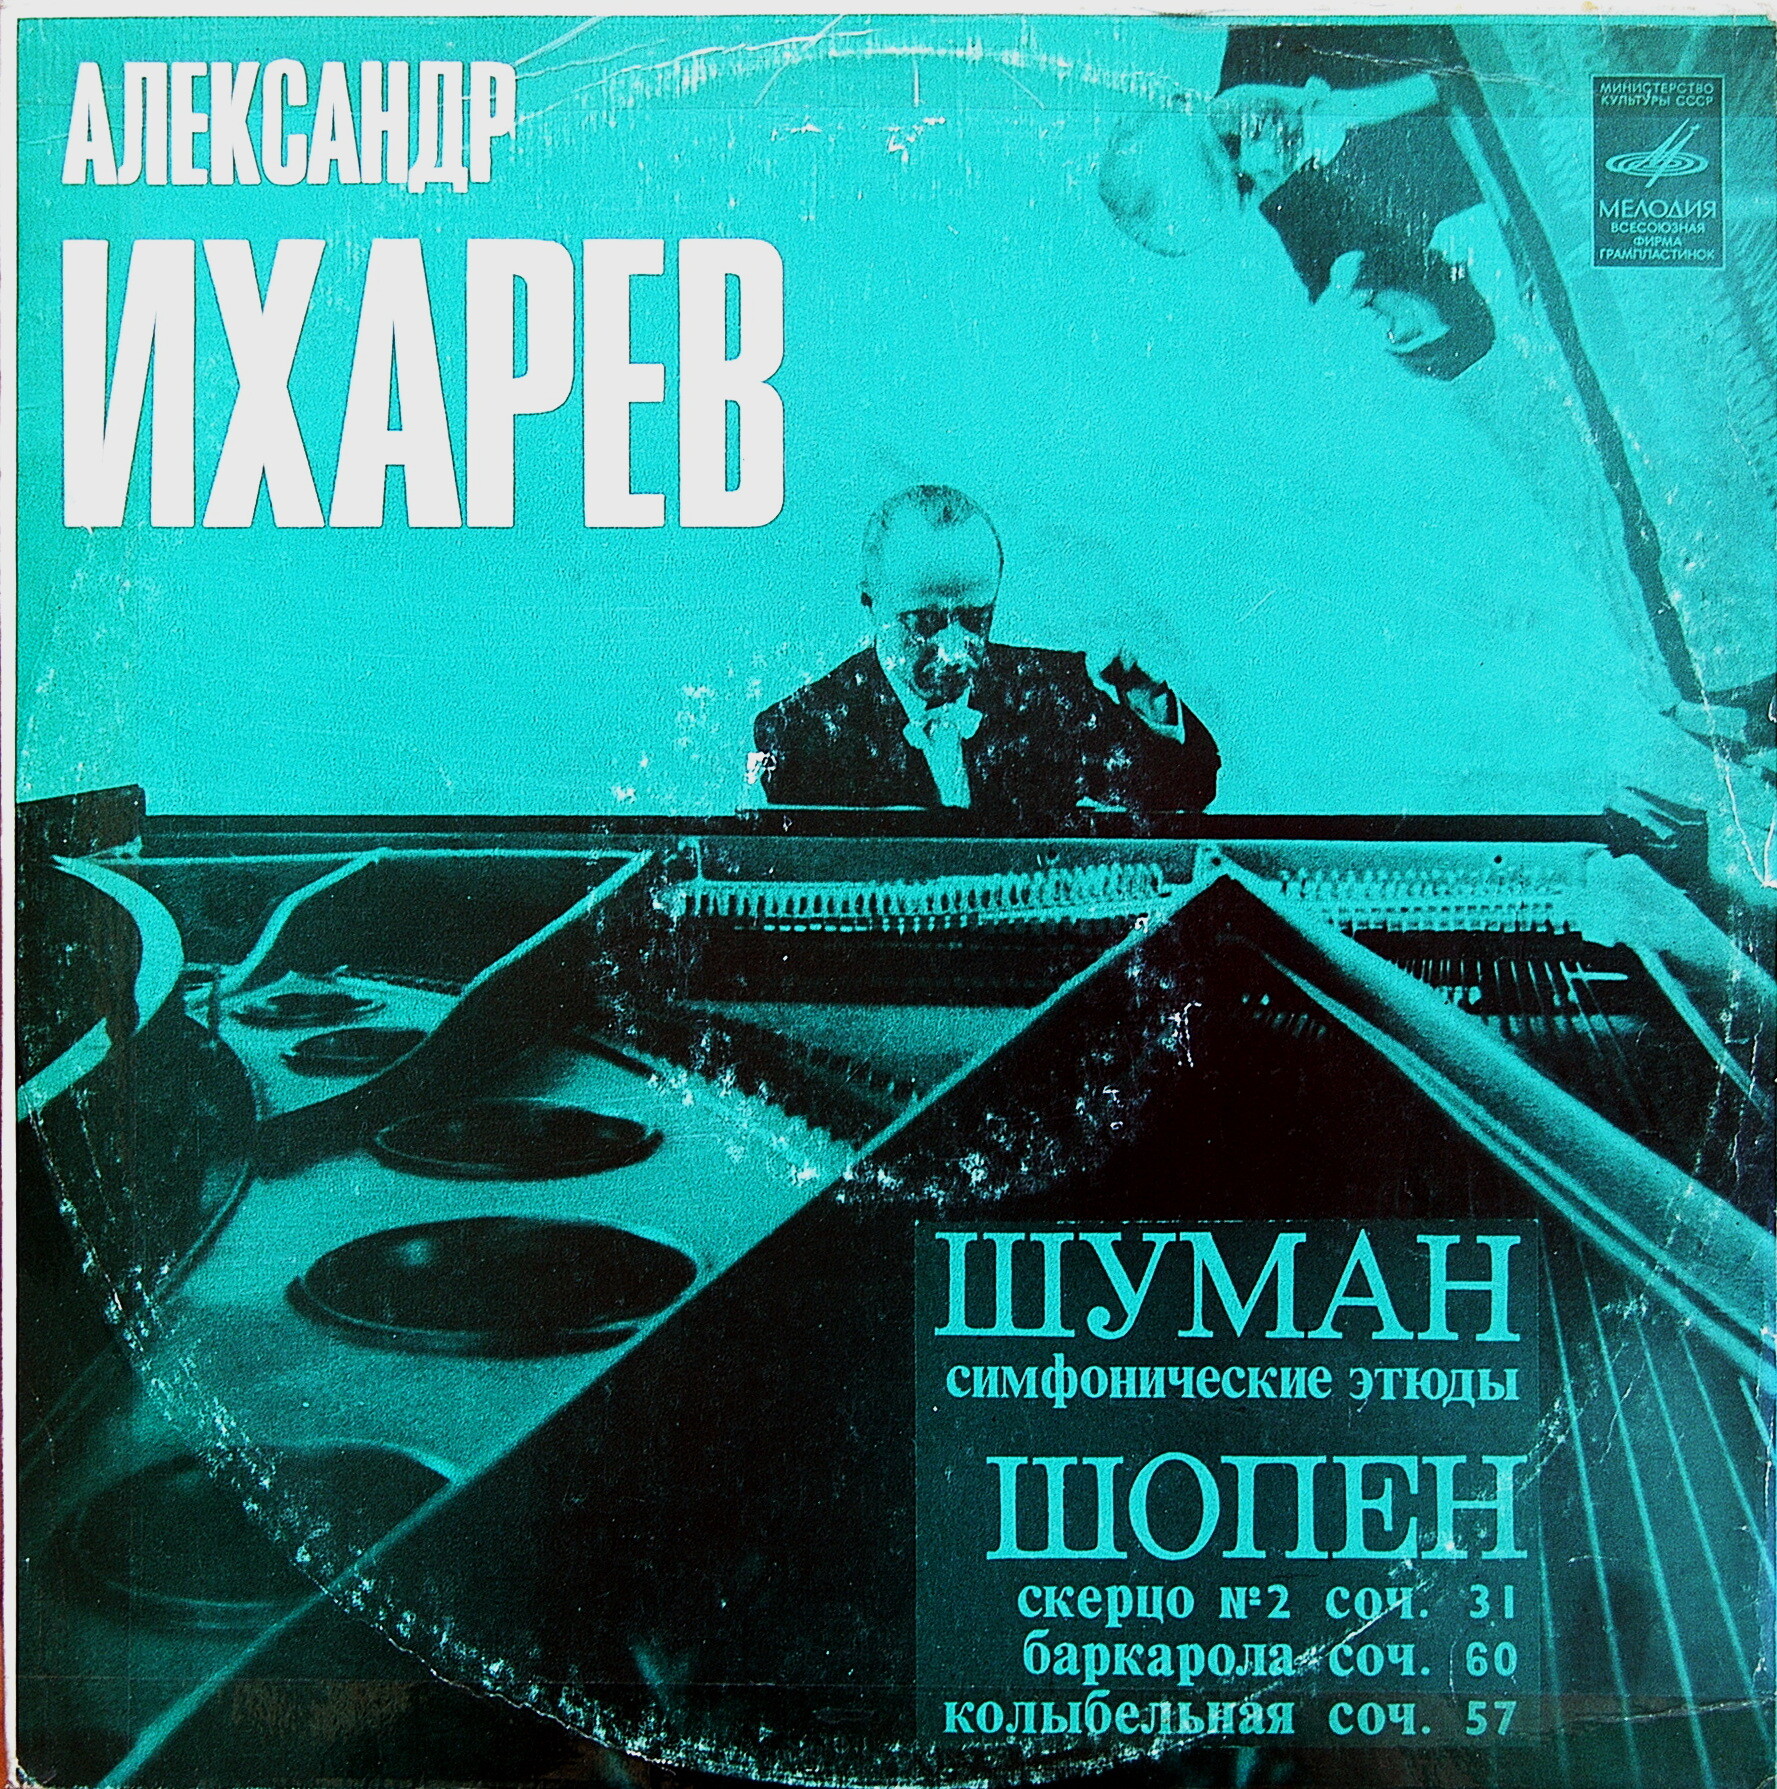 Александр ИХАРЕВ, фортепиано